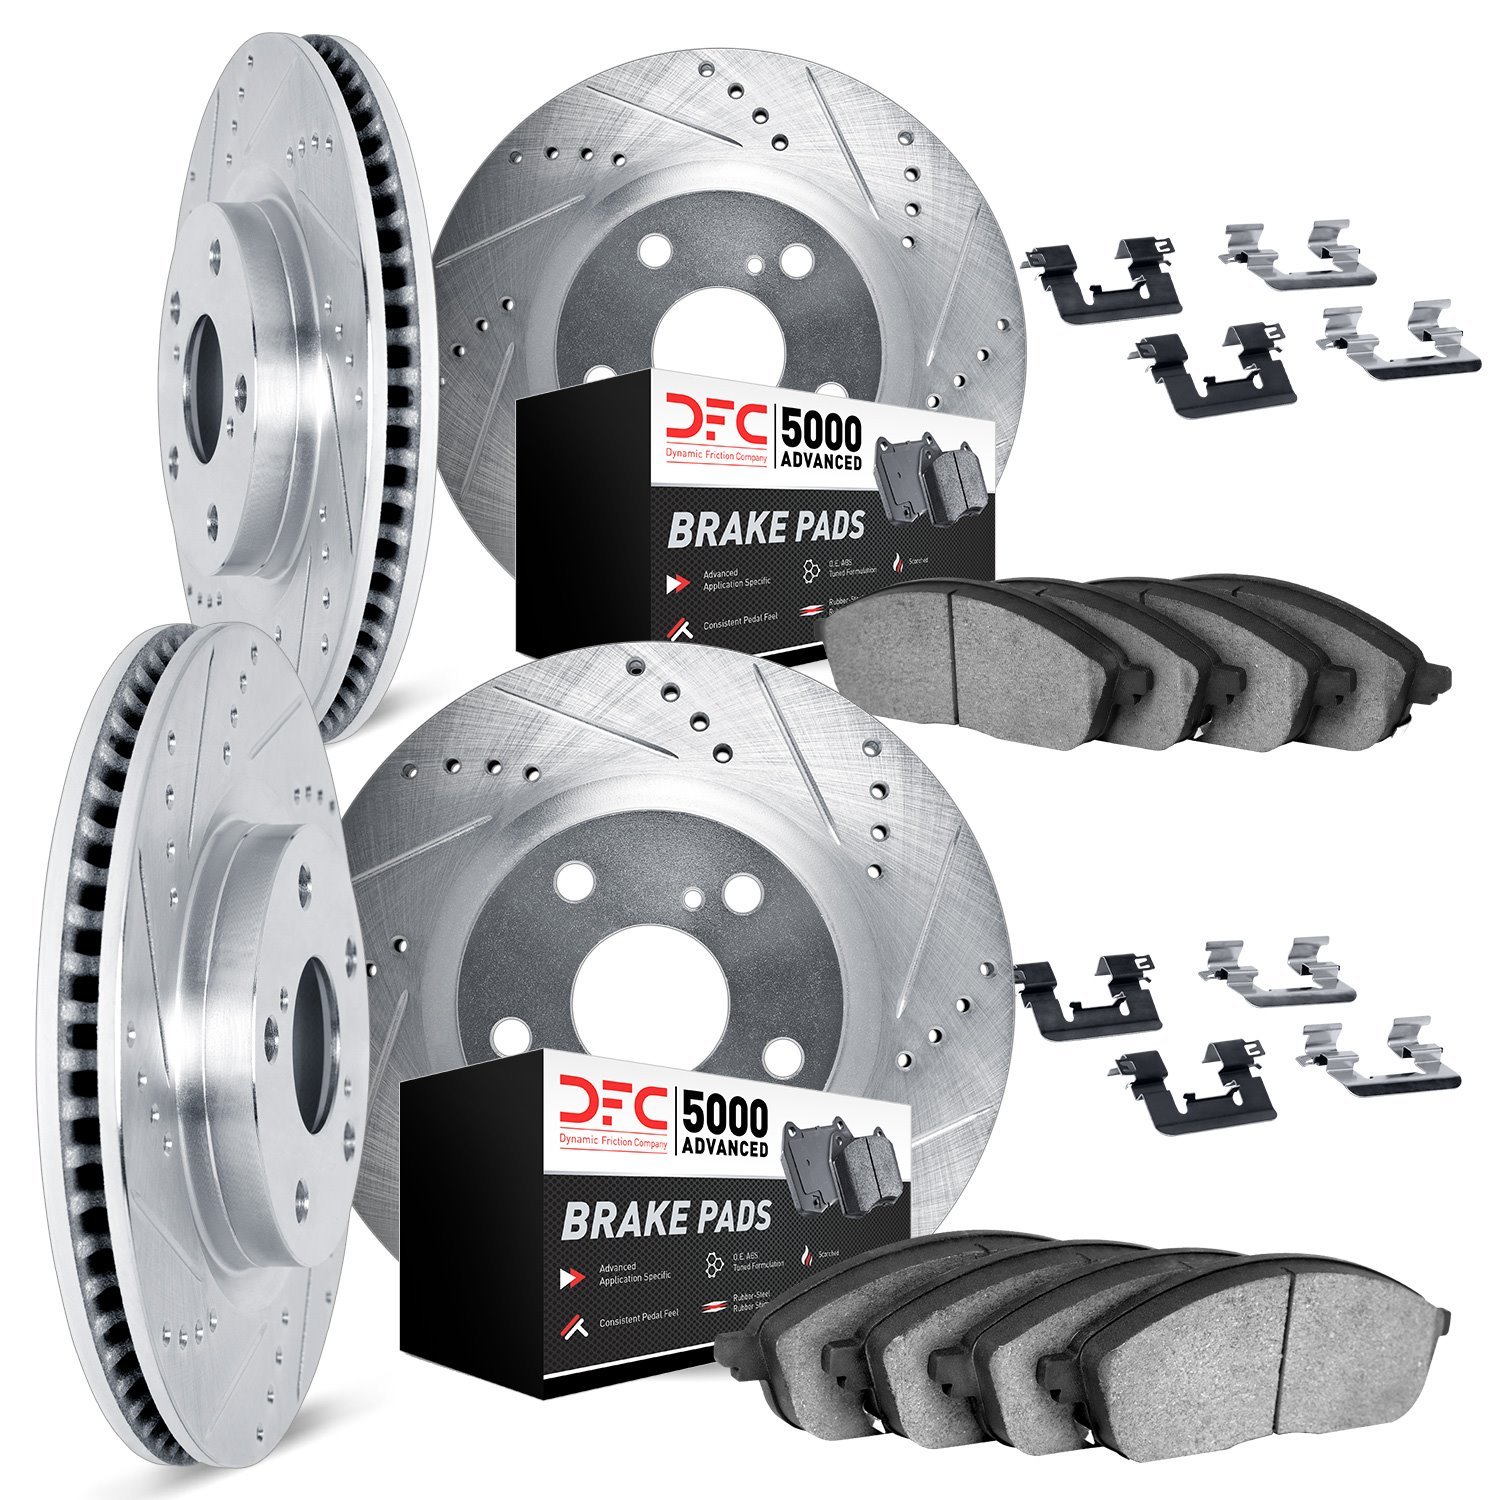 7514-67079 Drilled/Slotted Brake Rotors w/5000 Advanced Brake Pads Kit & Hardware [Silver], Fits Select Multiple Makes/Models, P